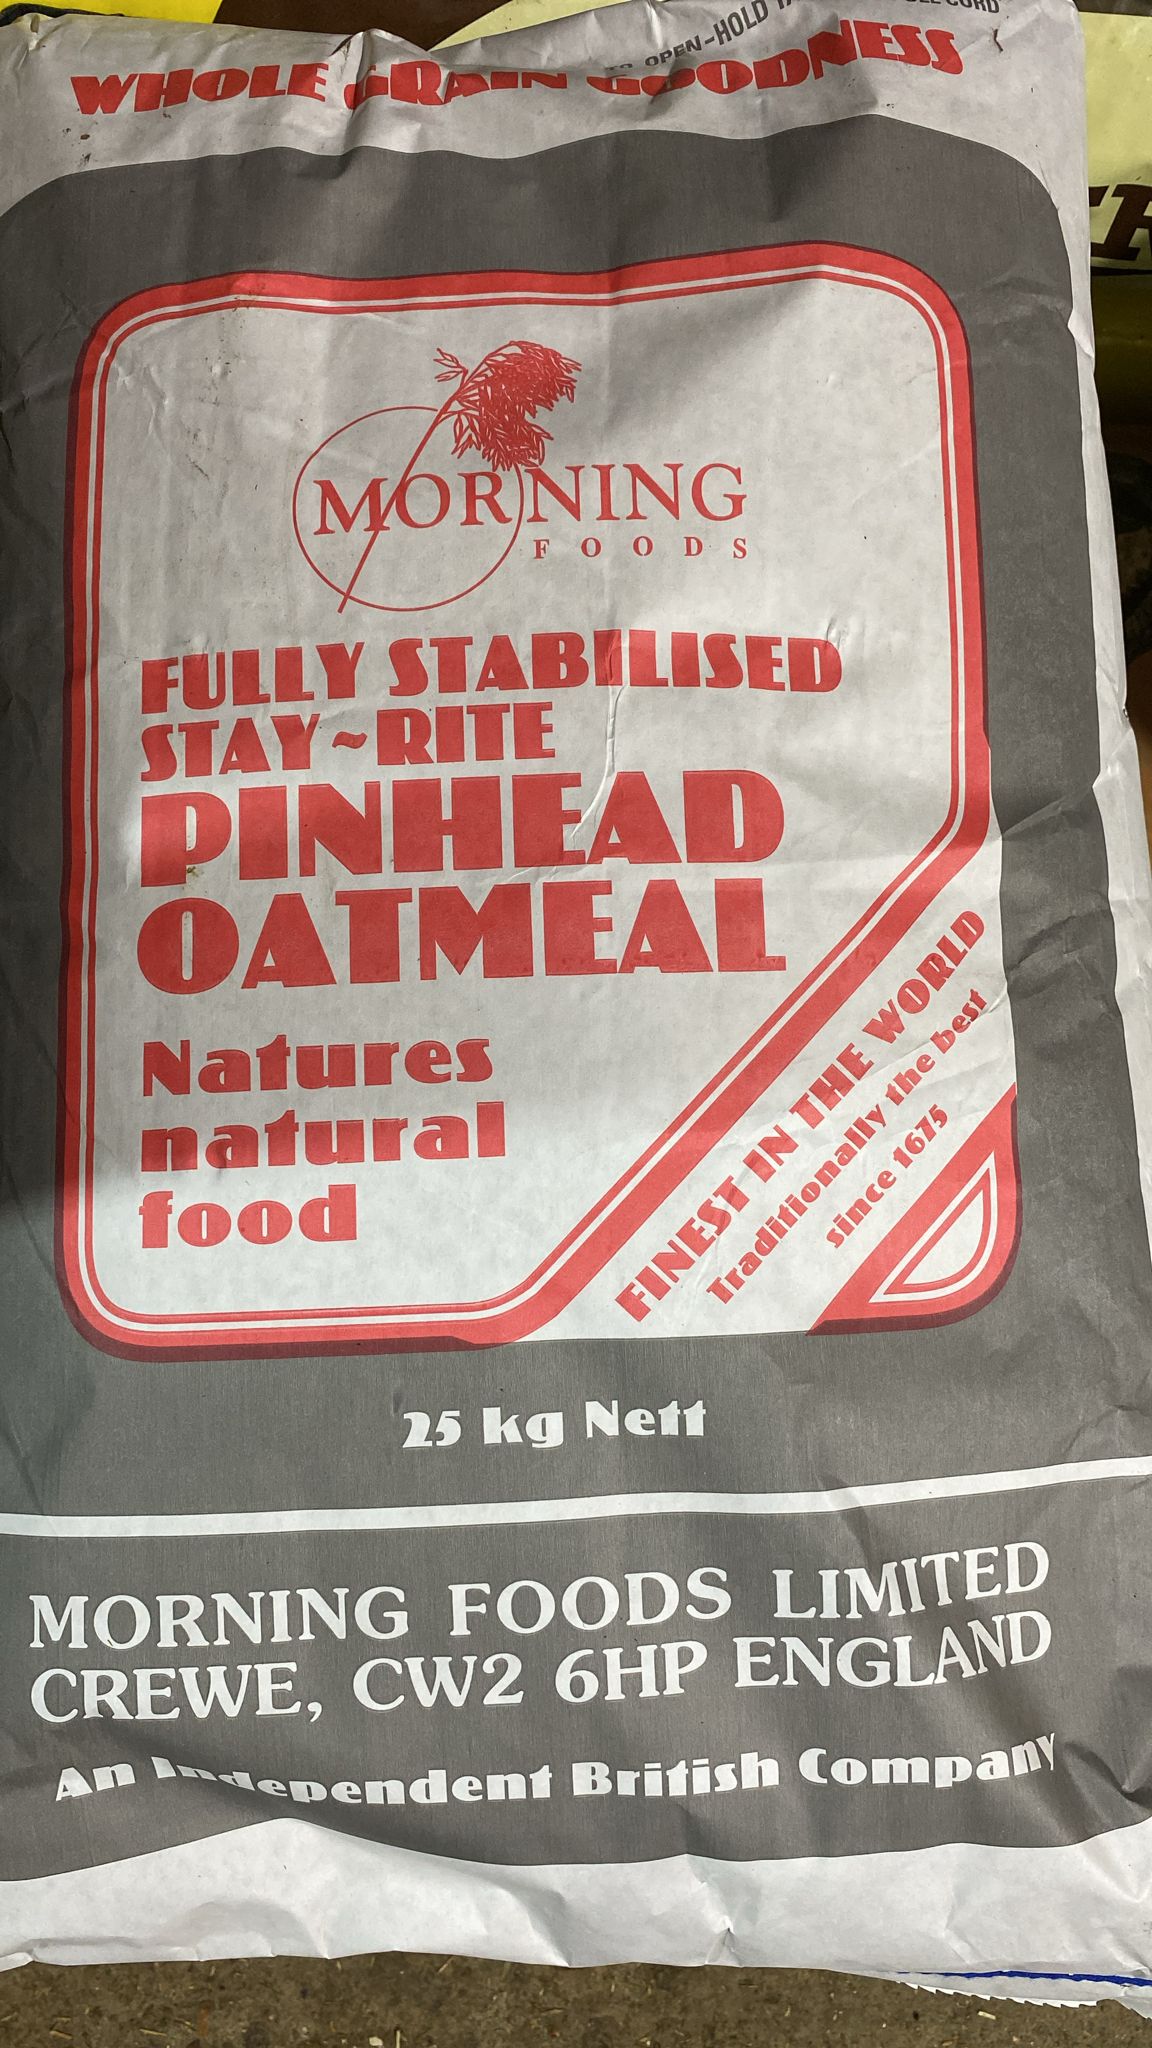 Mornflake Pinhead Oatmeal